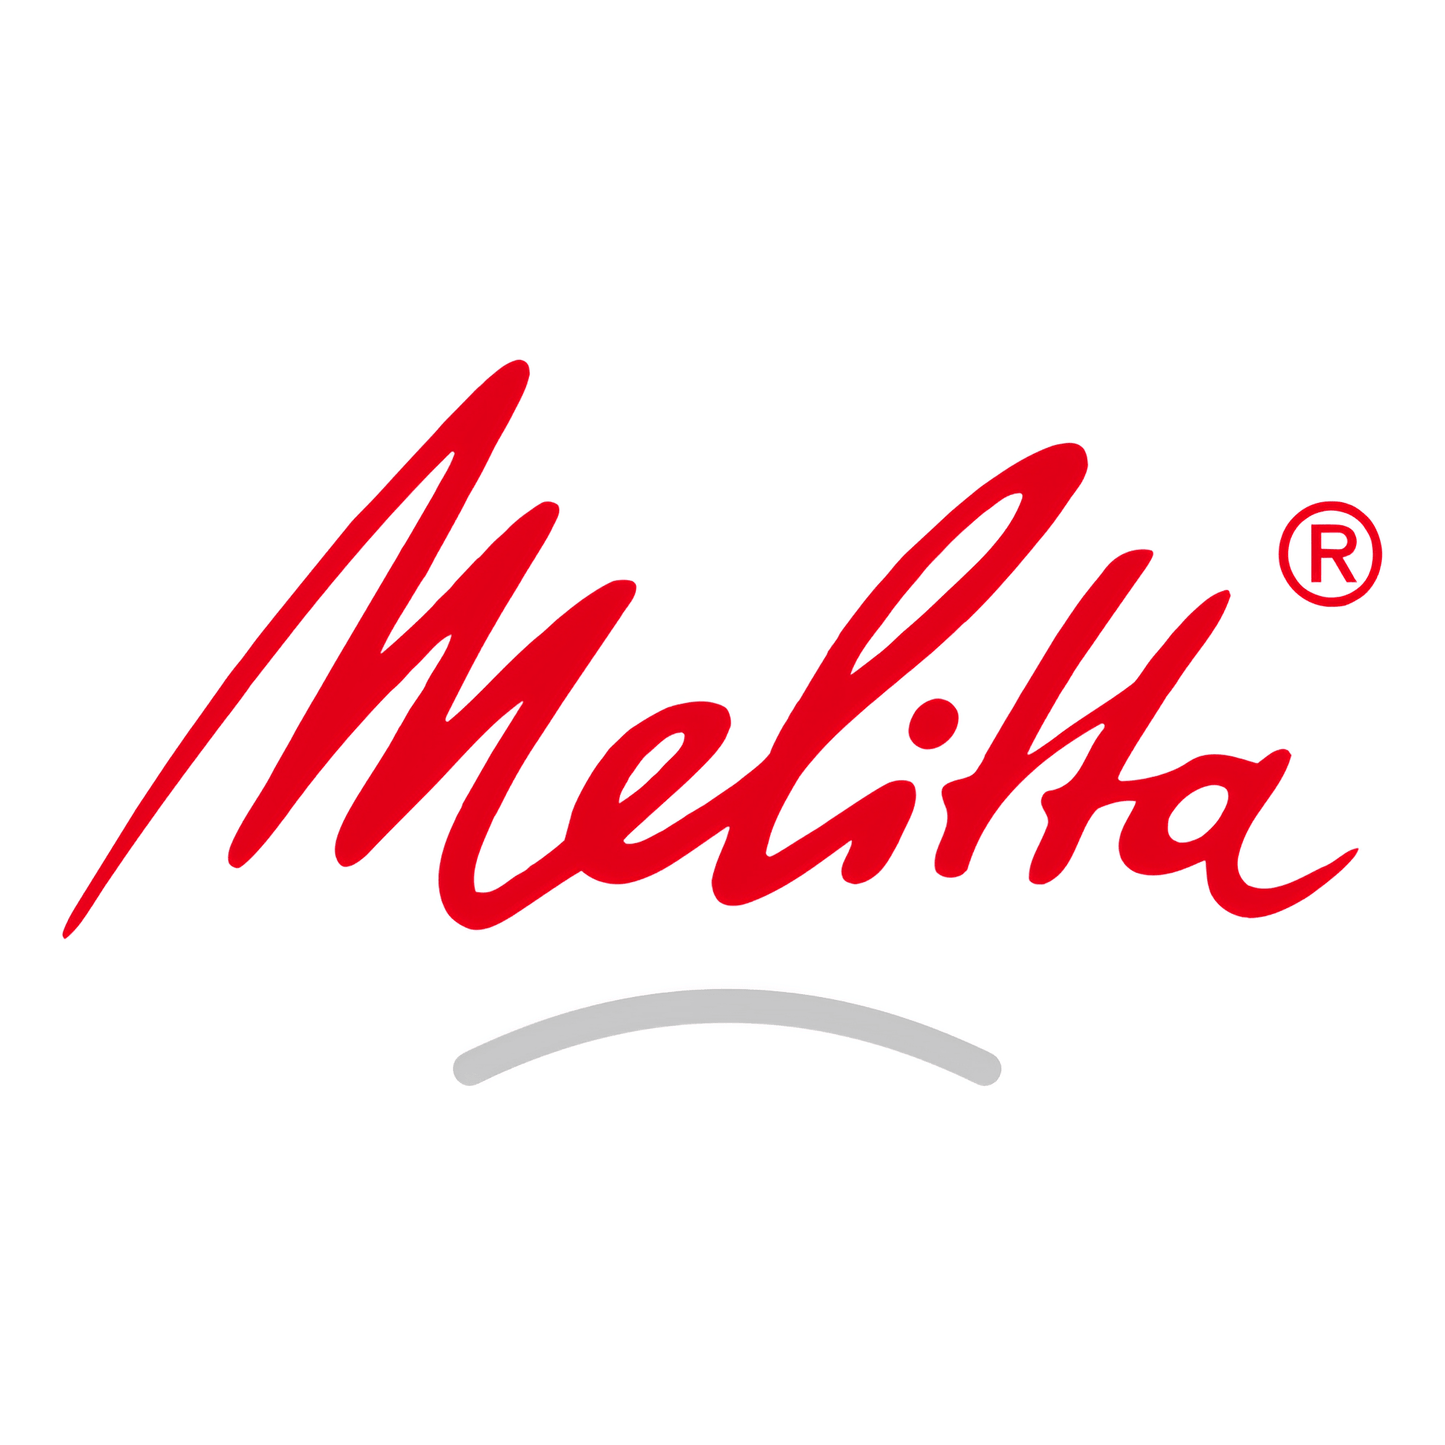 Melitta Farm Flavor Coffee 17.64 oz. (Pack of 2) - Brazilian Shop